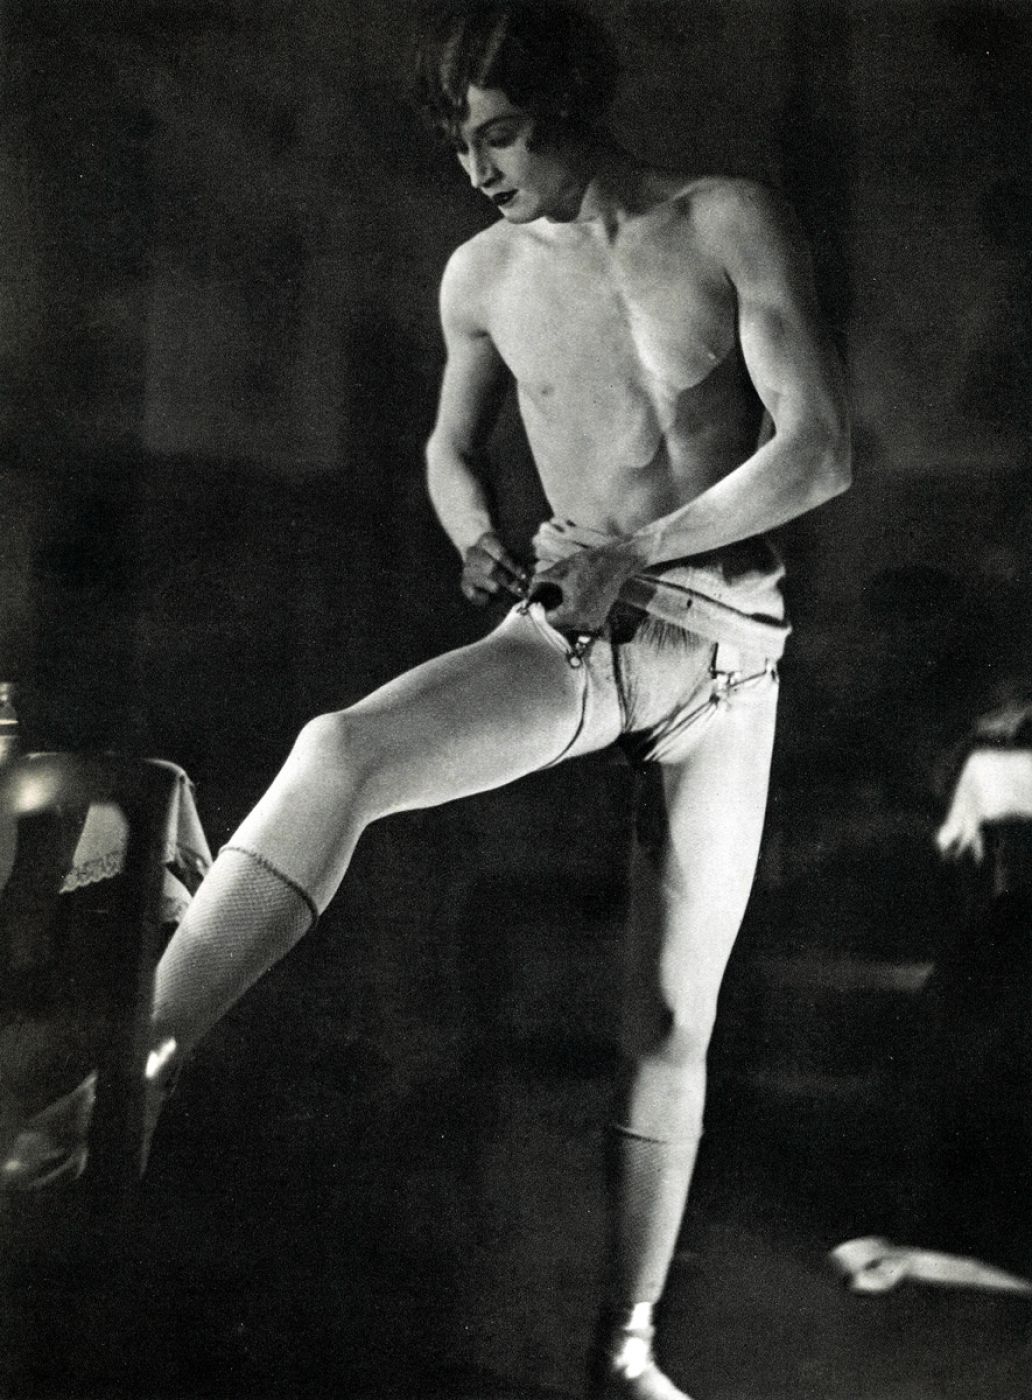 Man Ray, “Barbette”, 1926